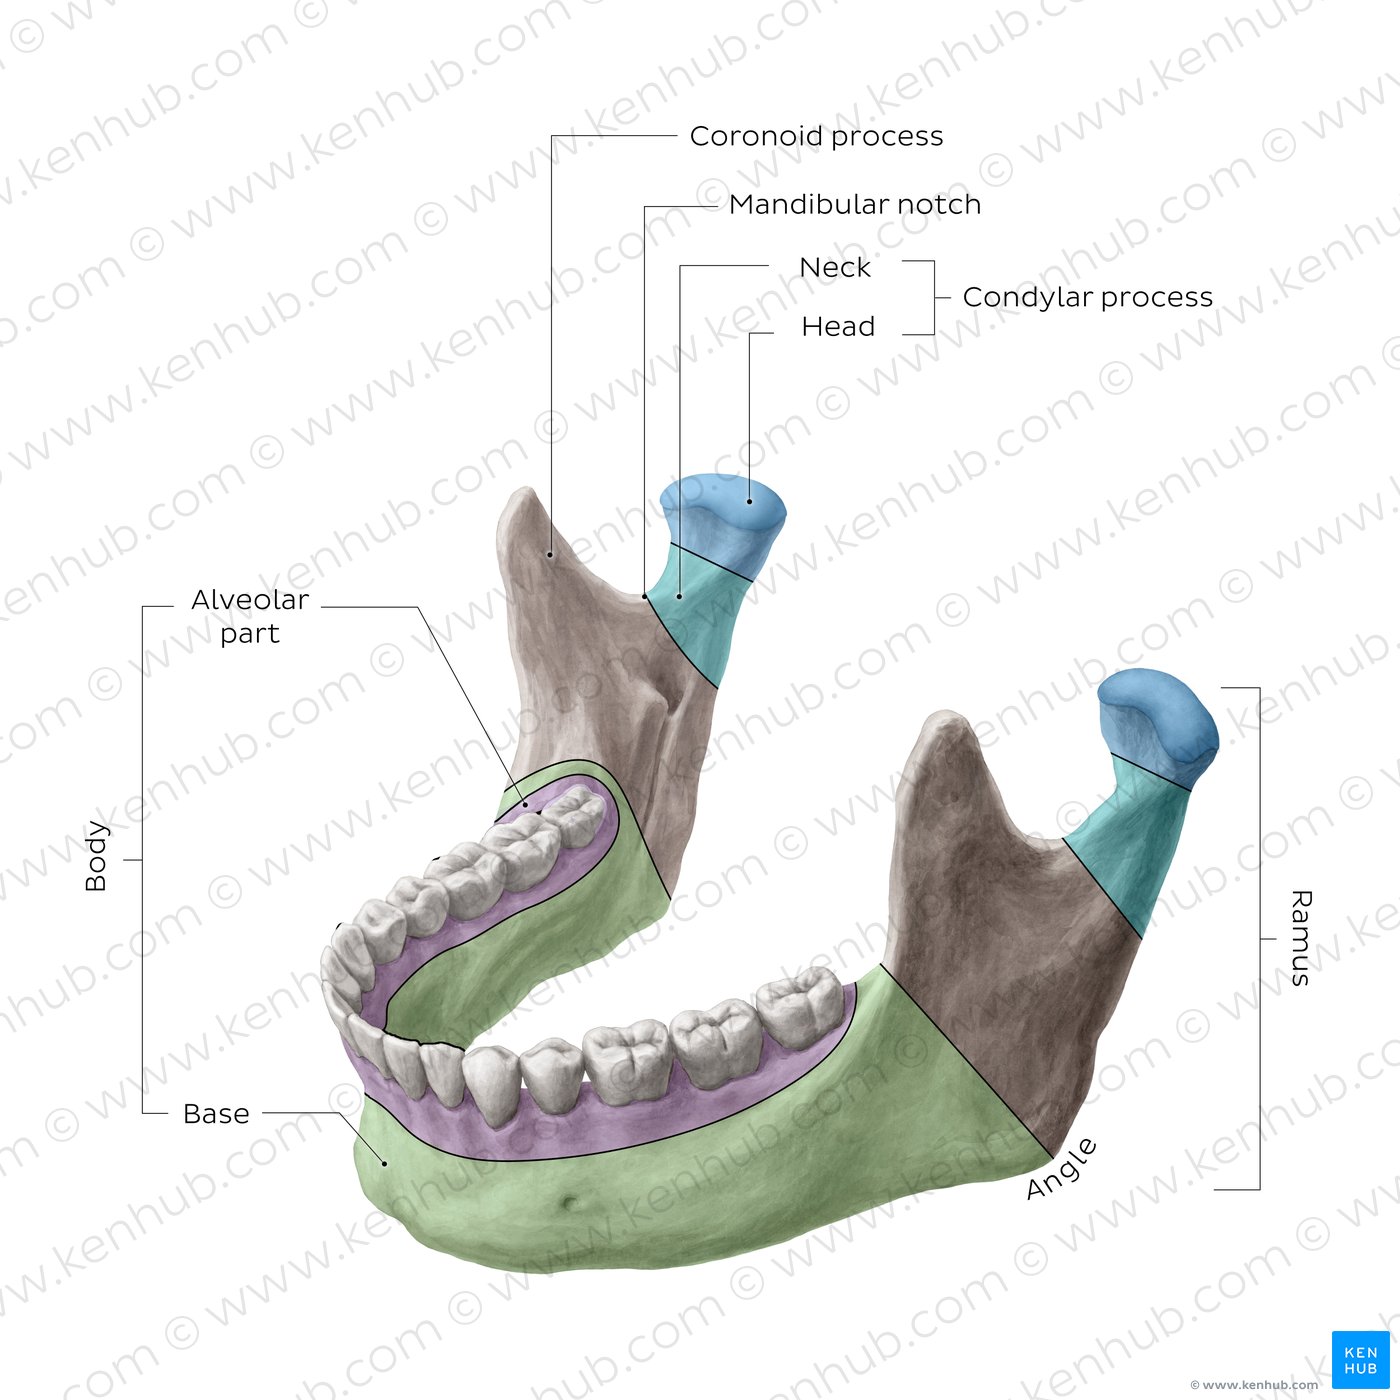 General circulation larynx The mandible: Anatomy, structure, function | Kenhub